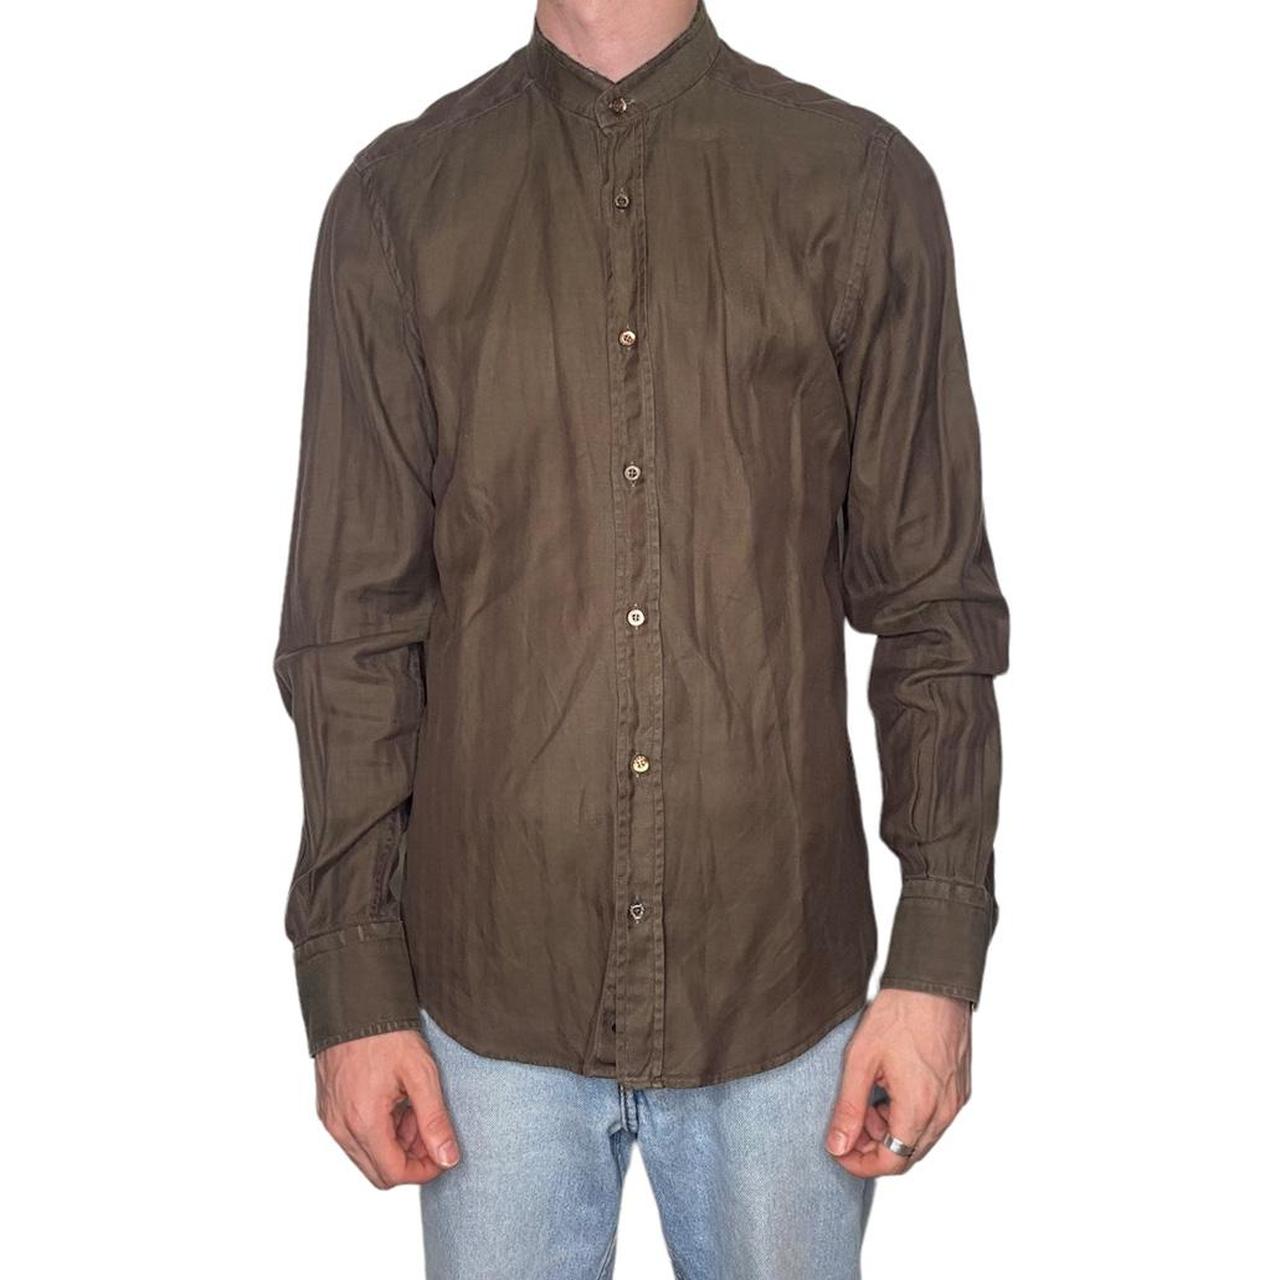 Vintage Gucci Collarless Button up shirt - fits as a... - Depop